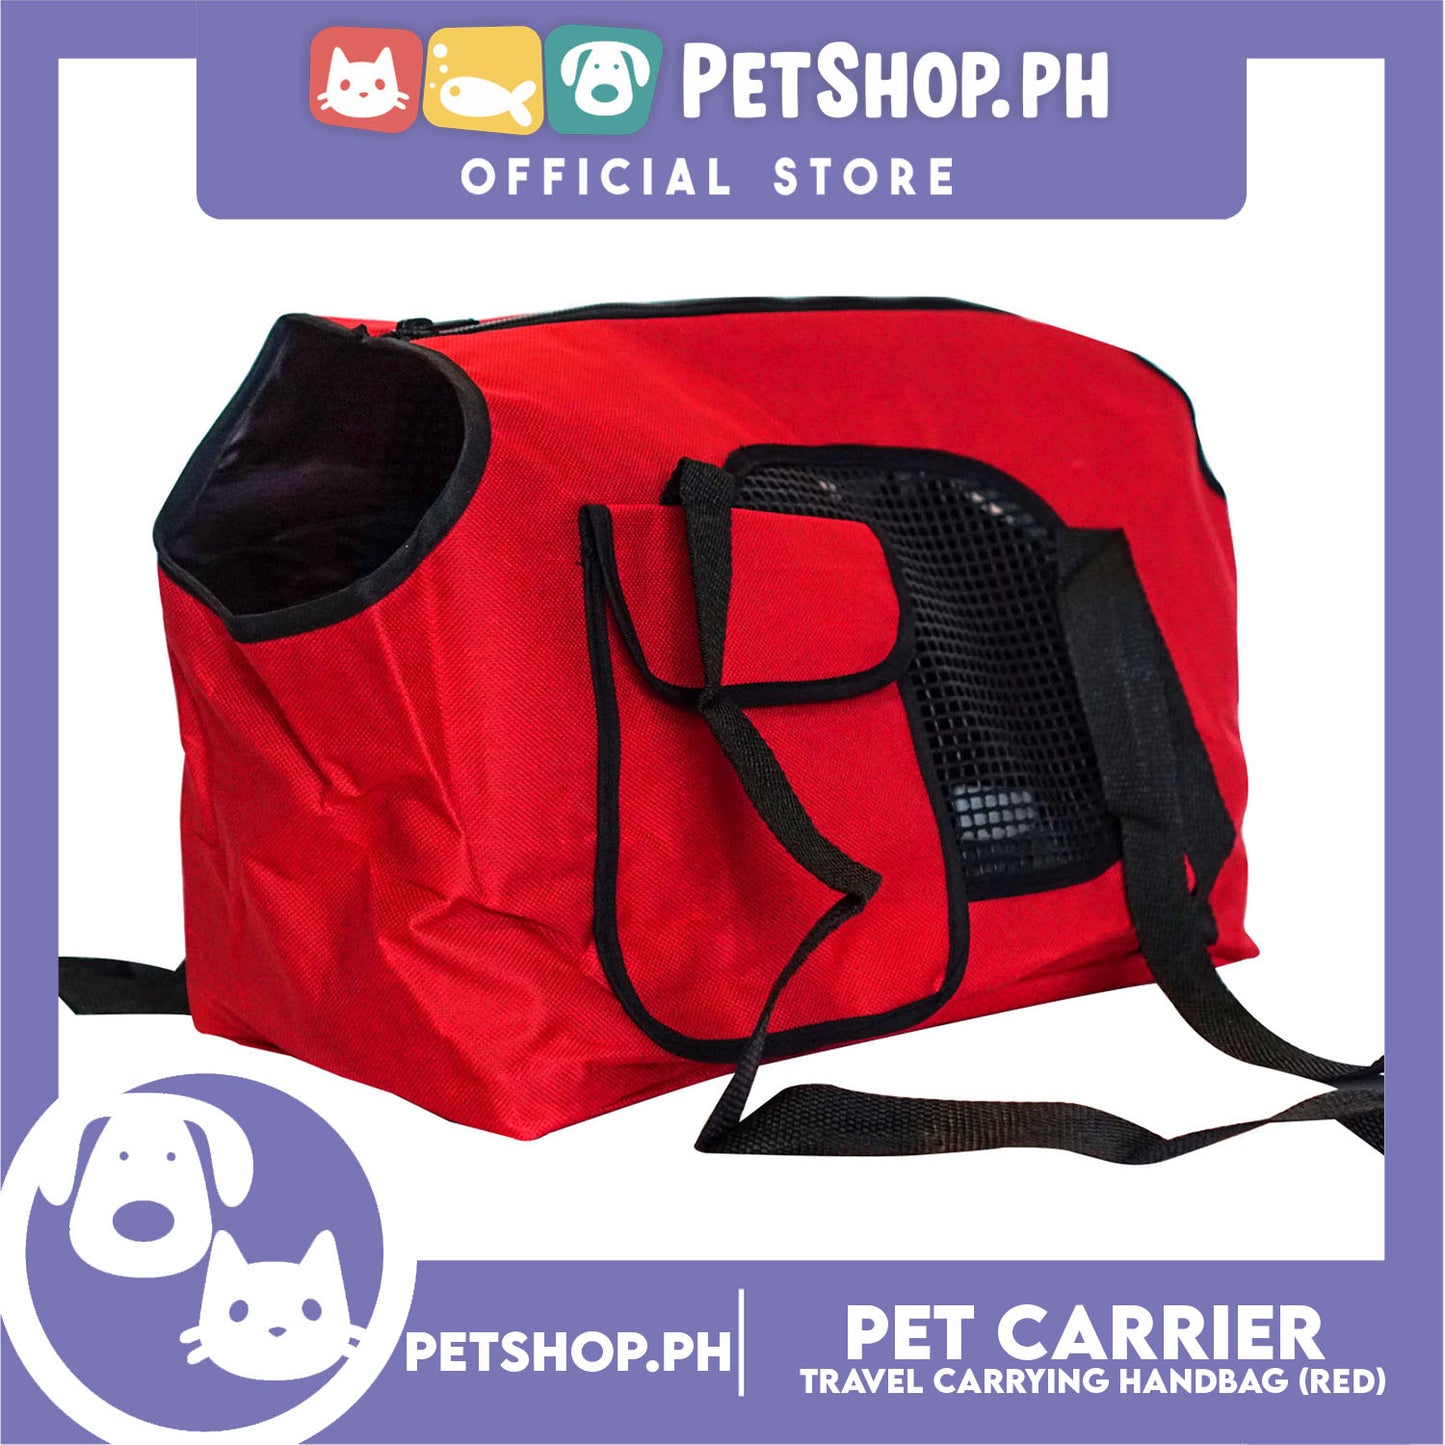 Pet Carrier Summer Travel Carrying Handbag, Shoulder Bag L36 x W18 x H26 Medium (Red)